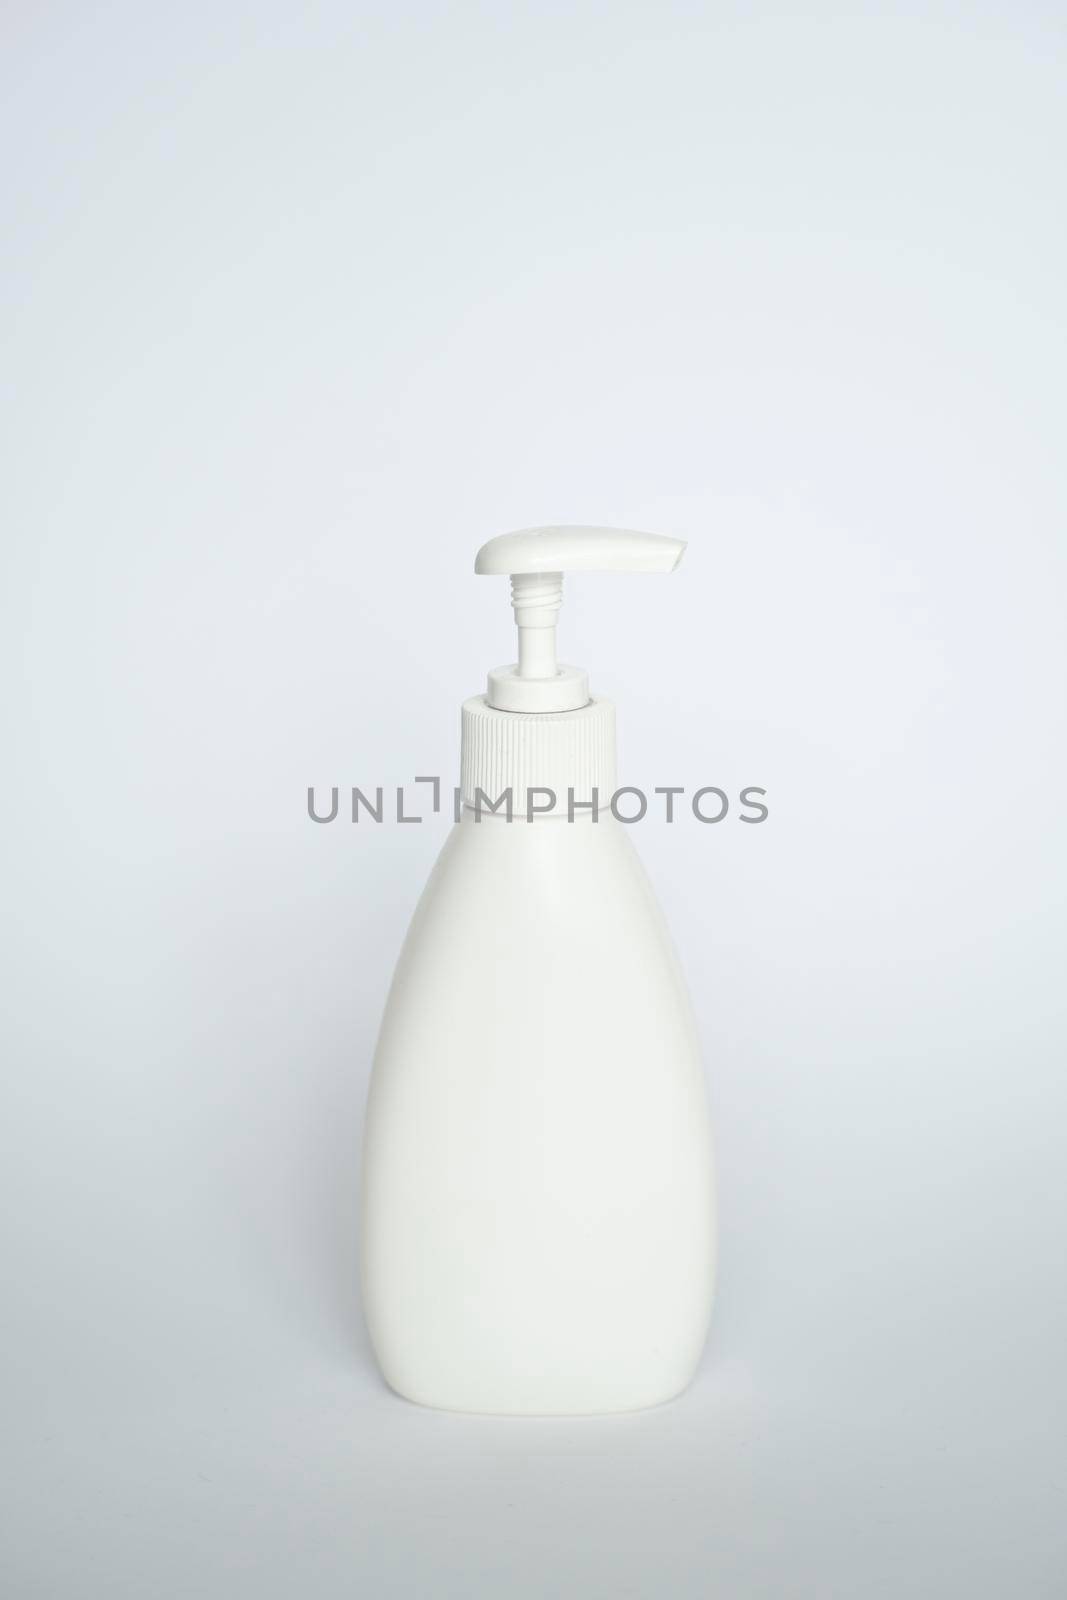 White plastic bottle used for shampoo or soap. Mock up template for design